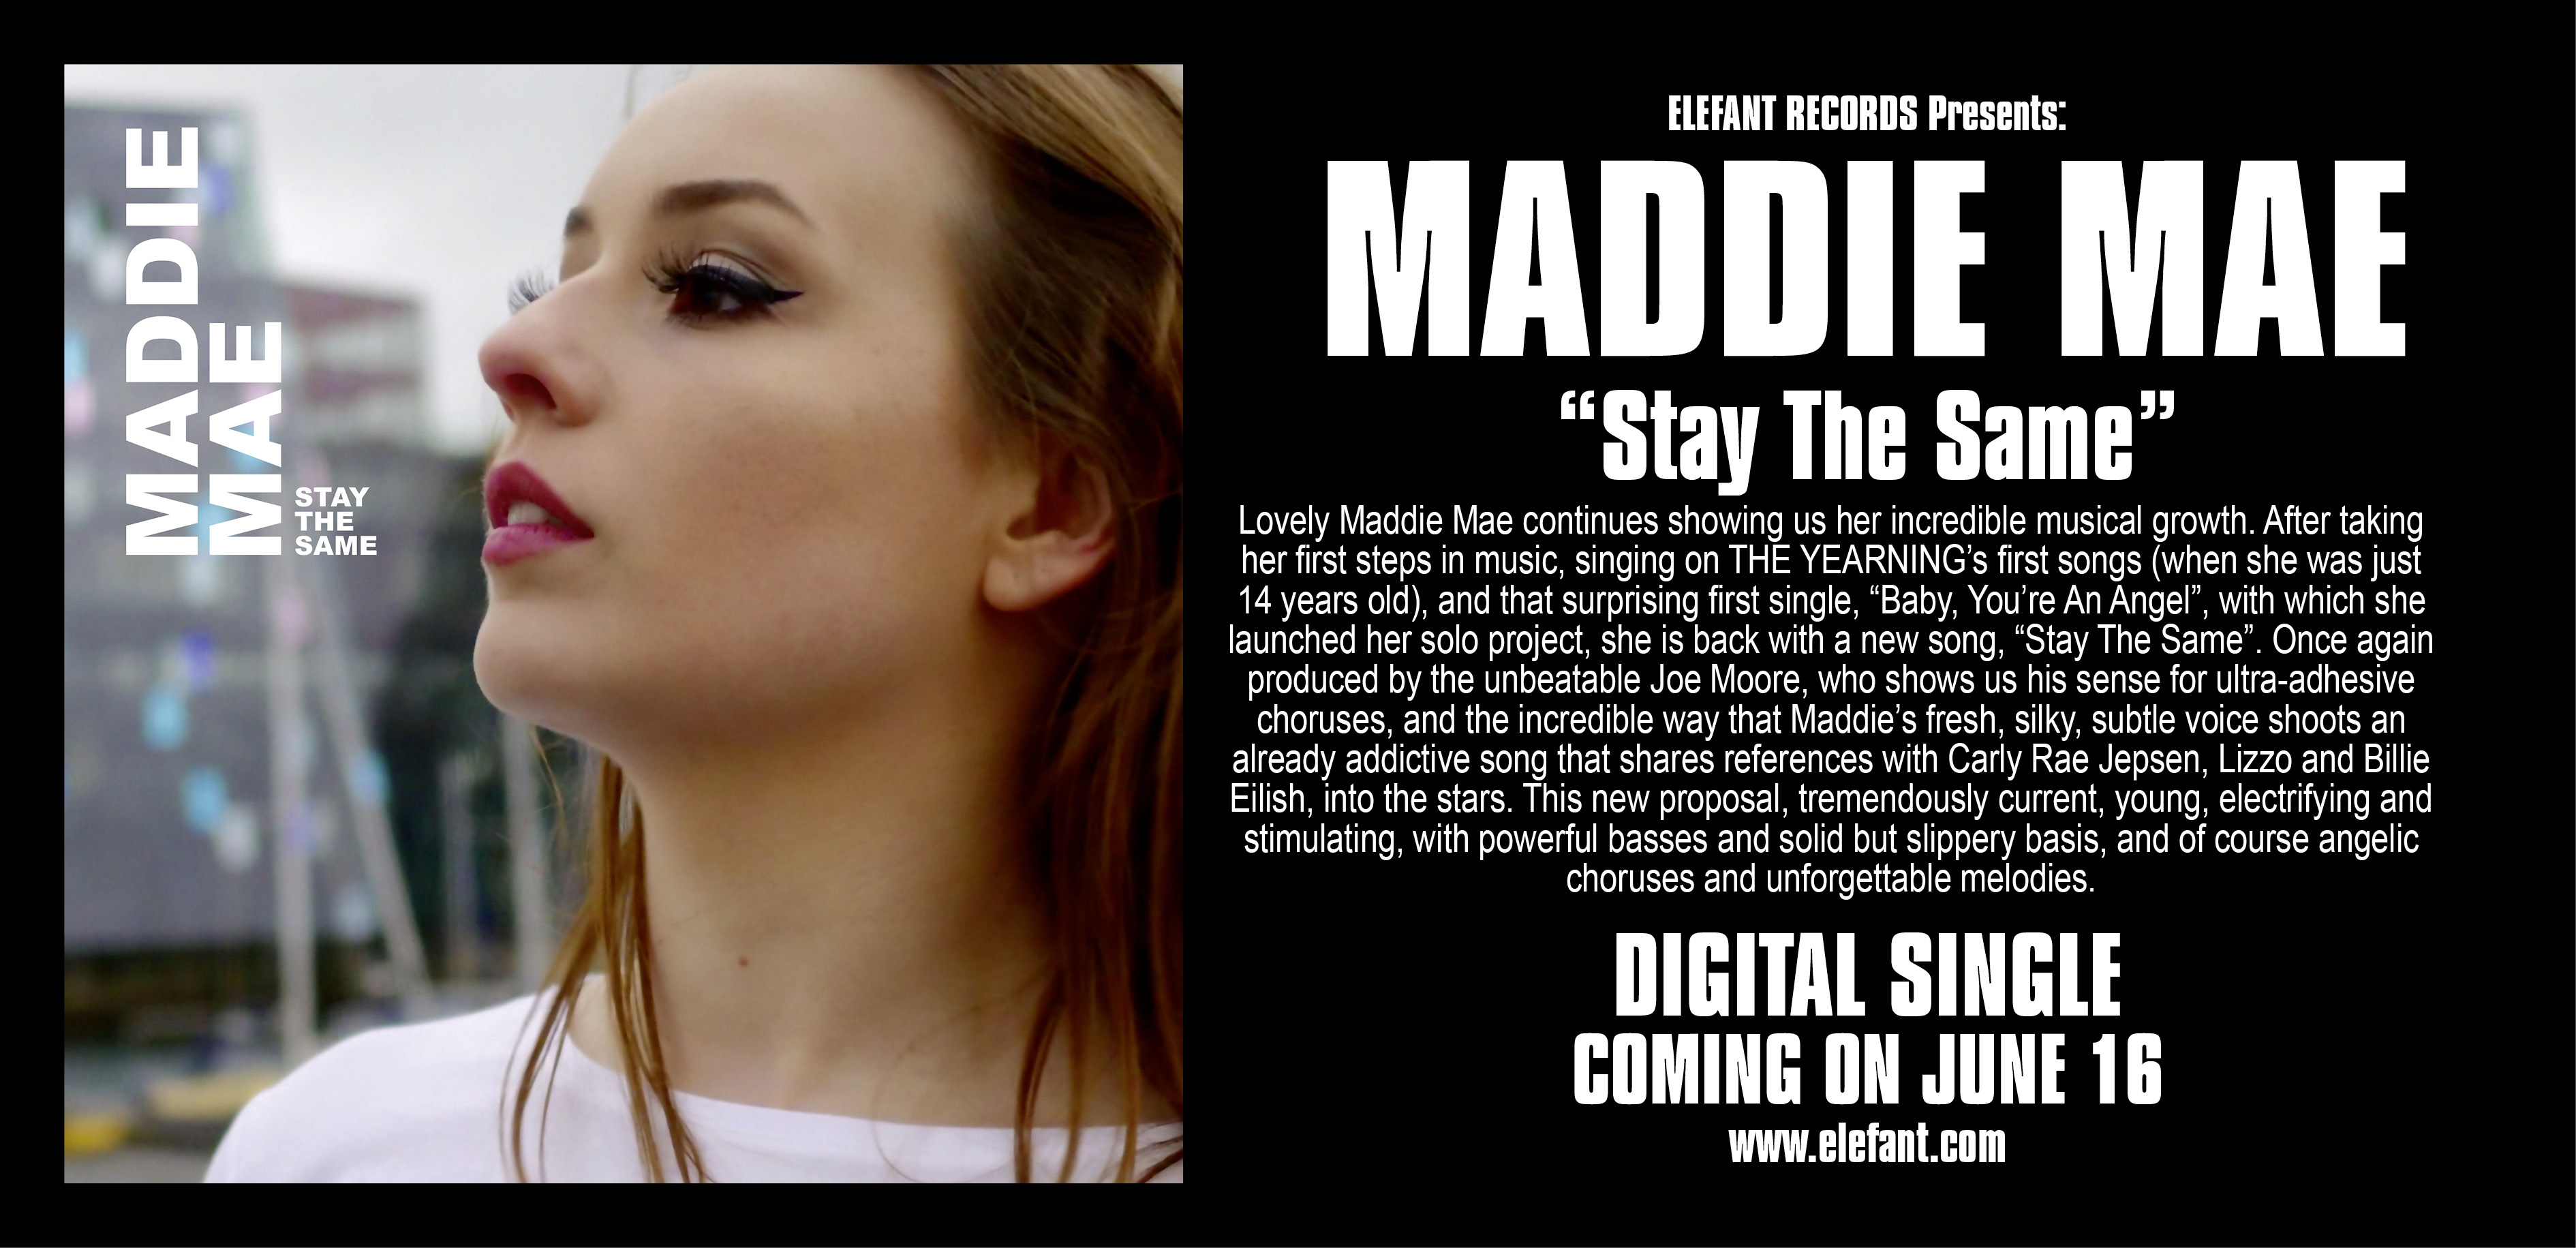 Maddie Mae "Stay The Same" Single Digital